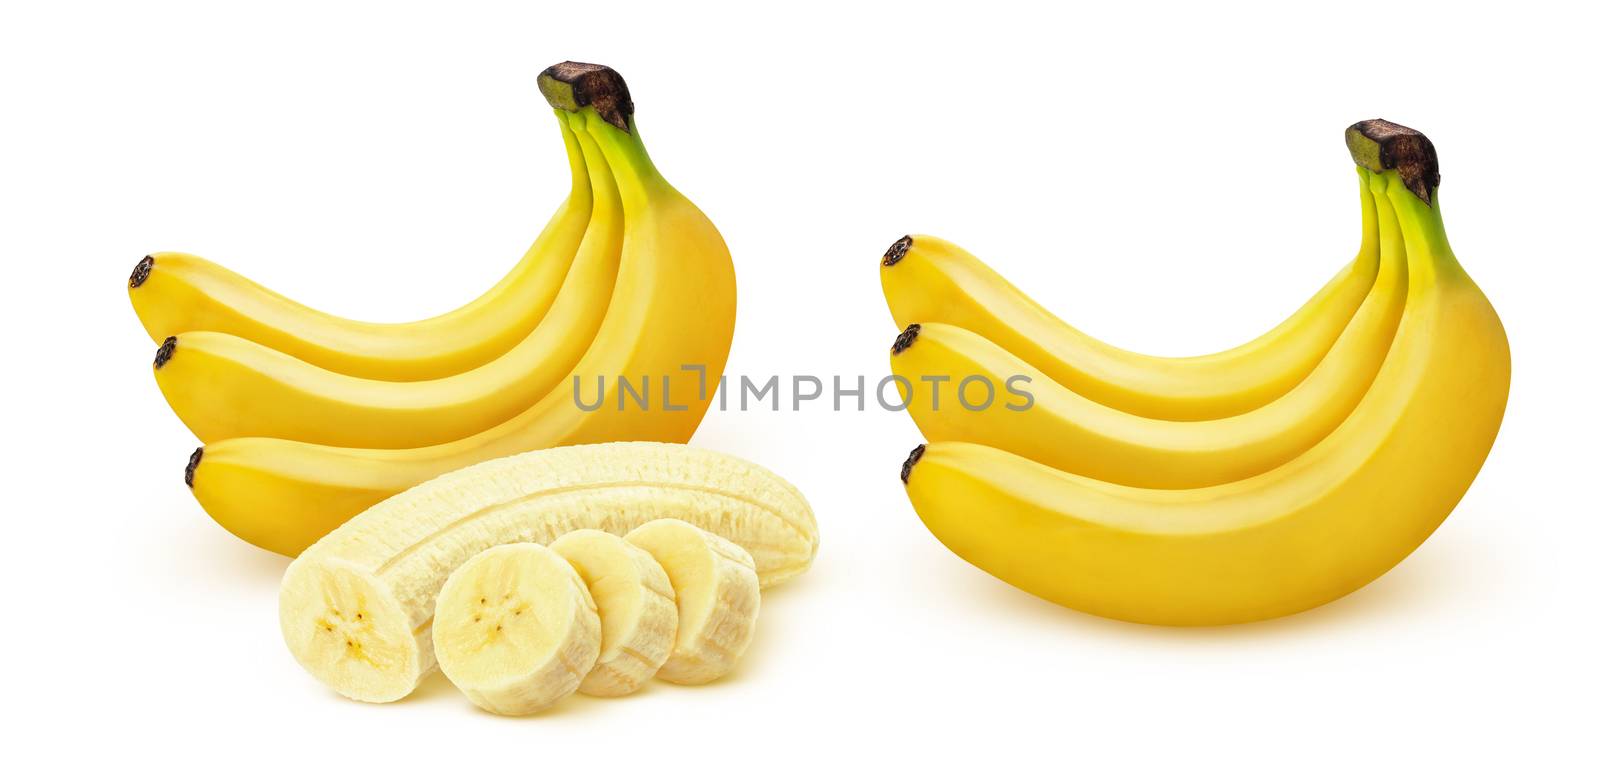 Banana. Bunch of bananas isolated on white background by xamtiw